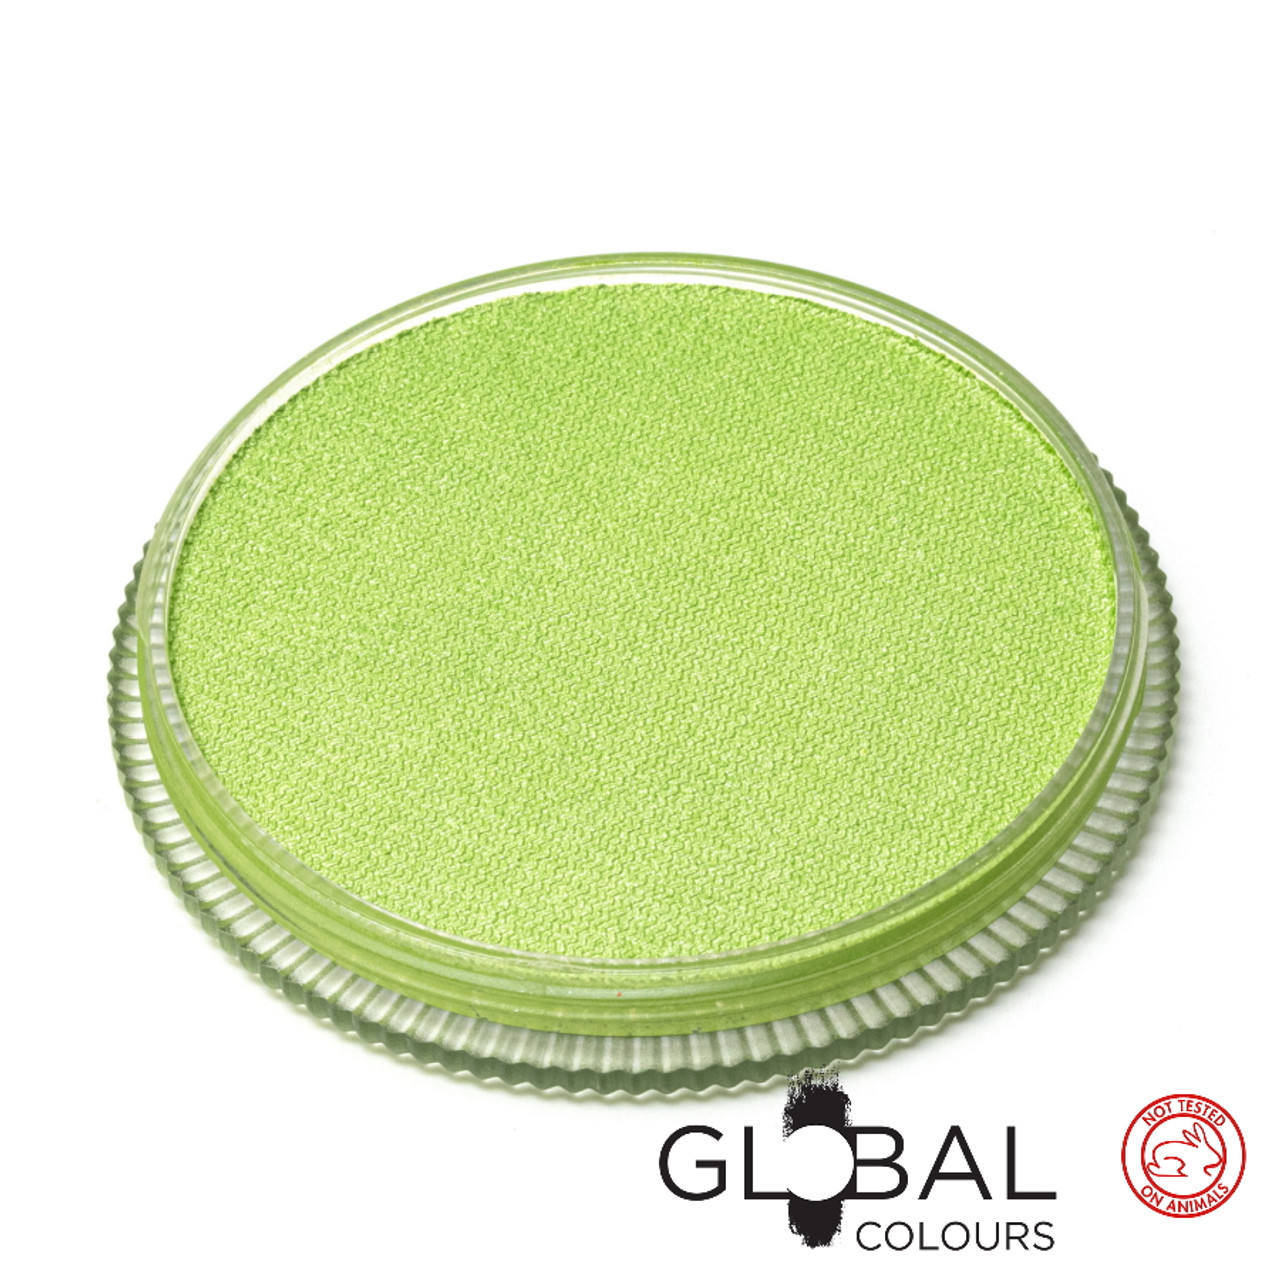 Global - Neon Green-32 GM